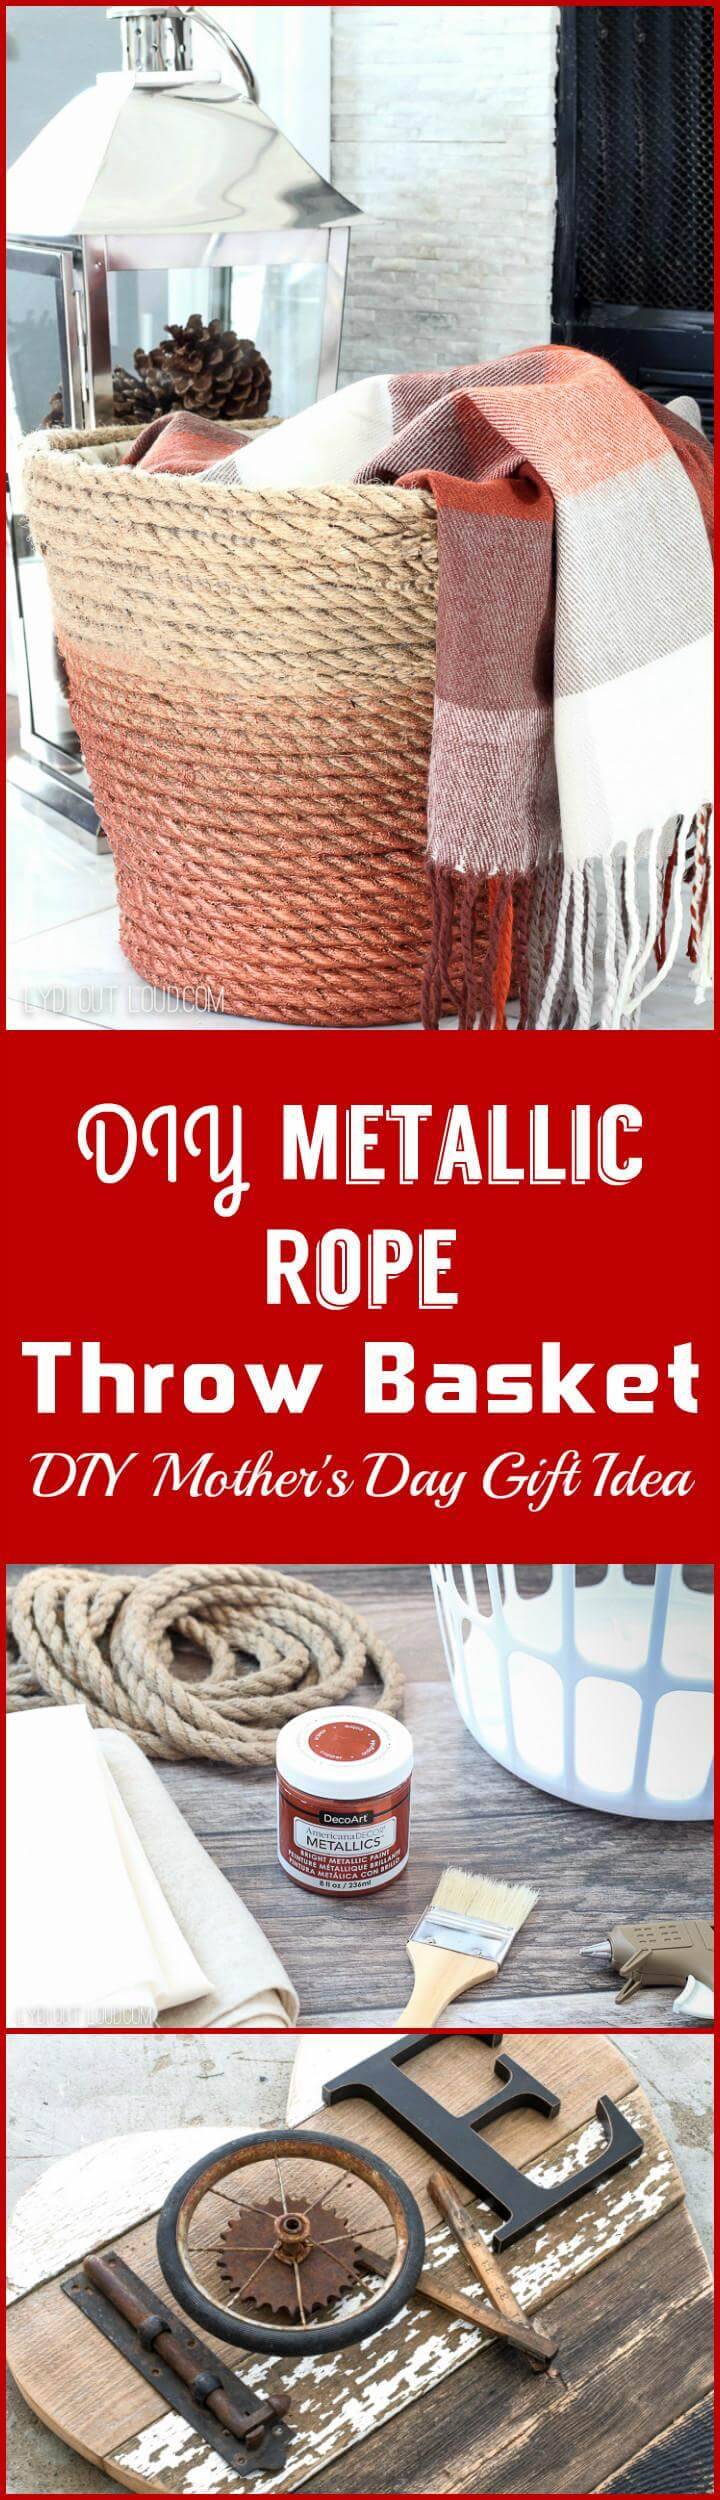 DIY metallic rope throw basket Mother's Day gift idea